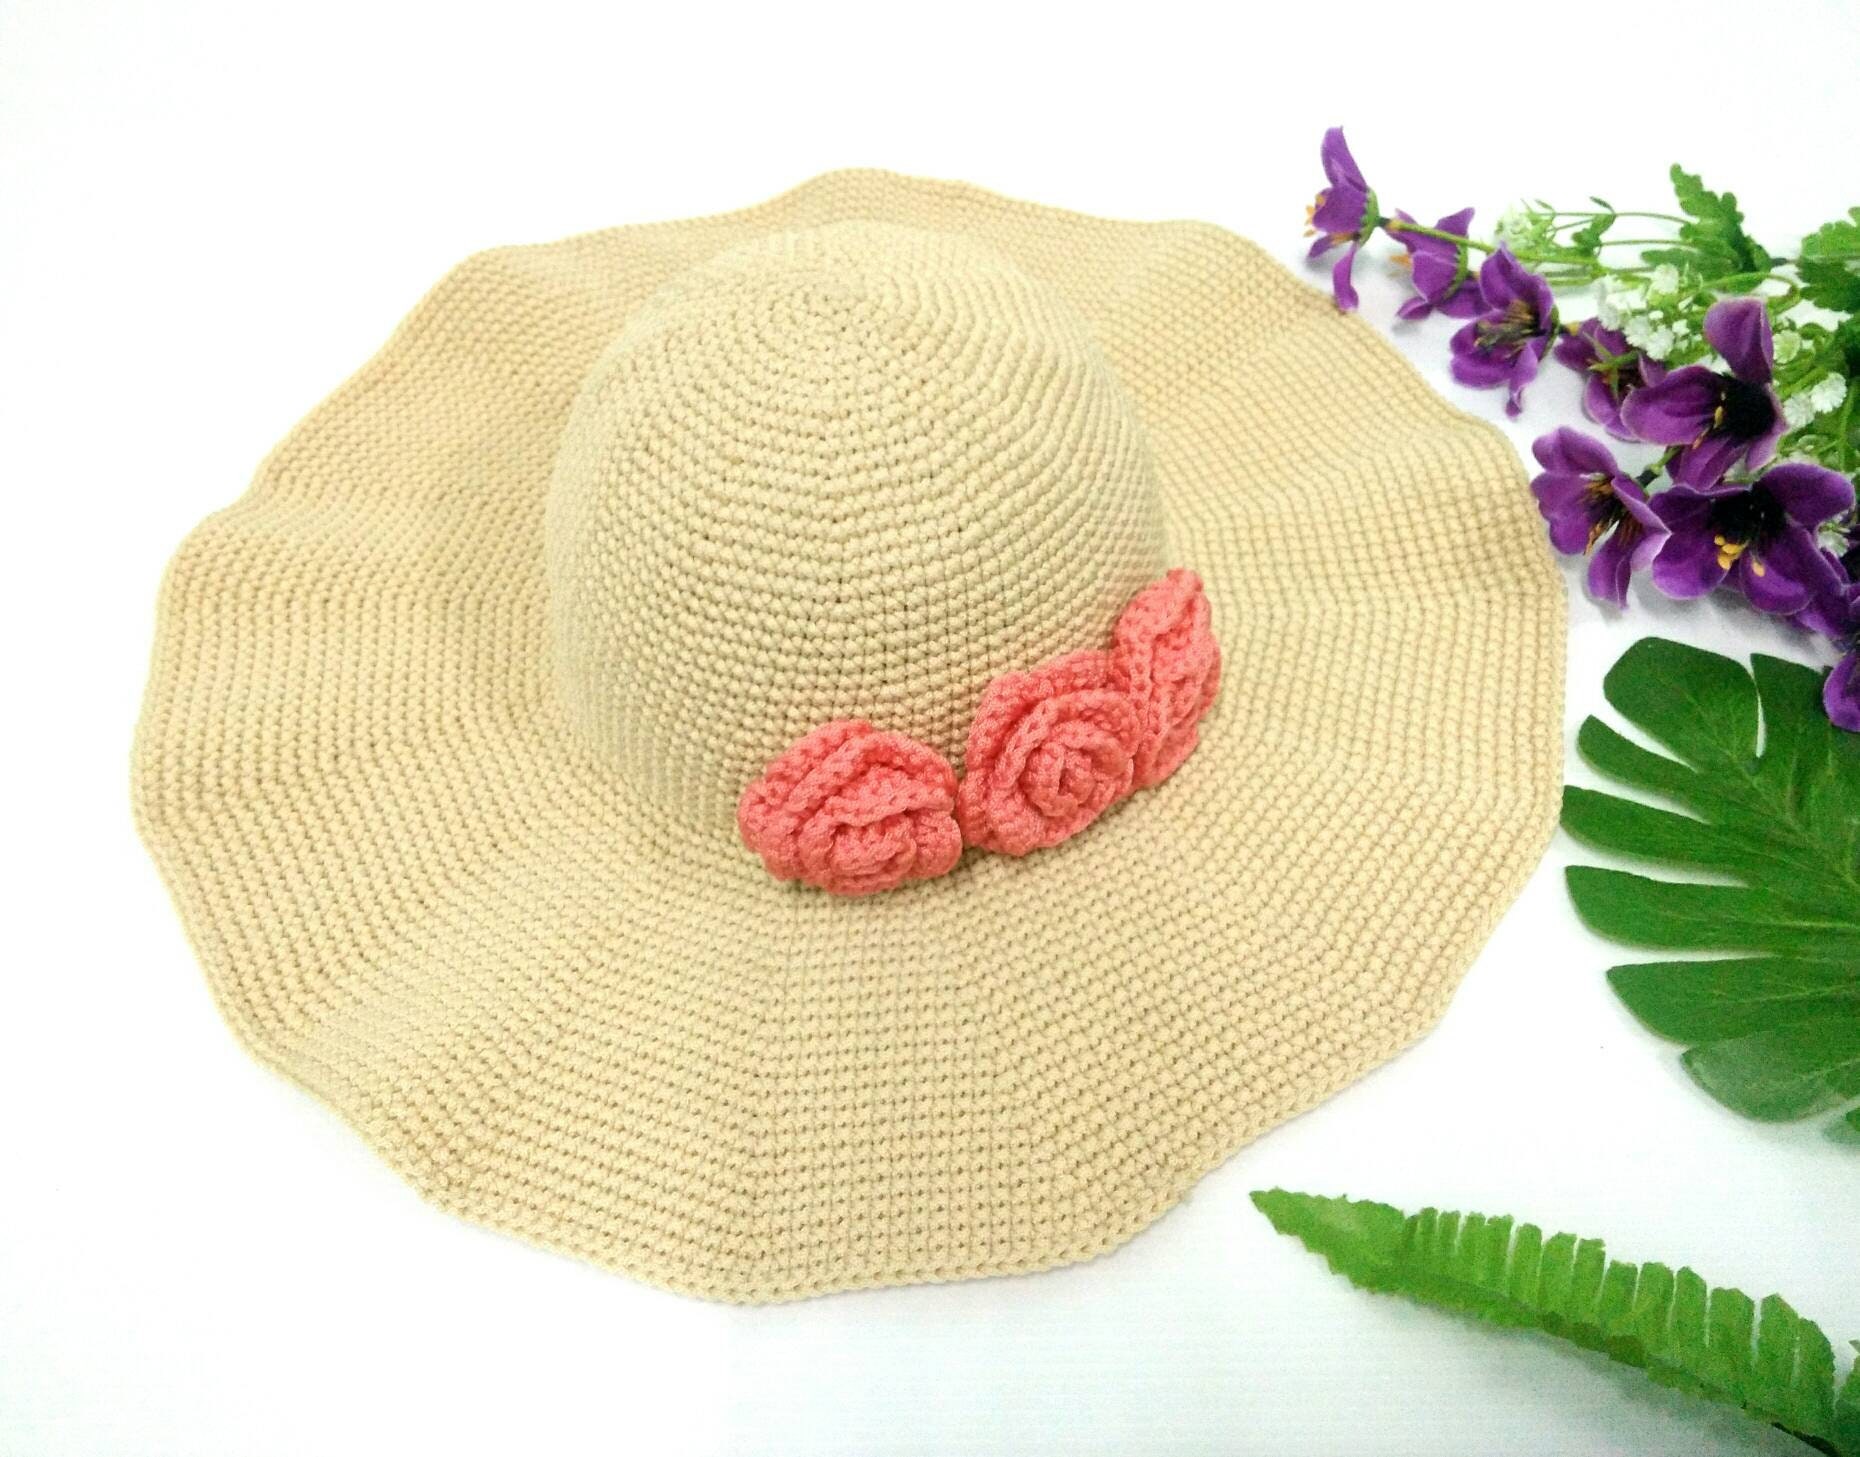 Crochet sun hat summer hat beach accessoryfashion | Etsy